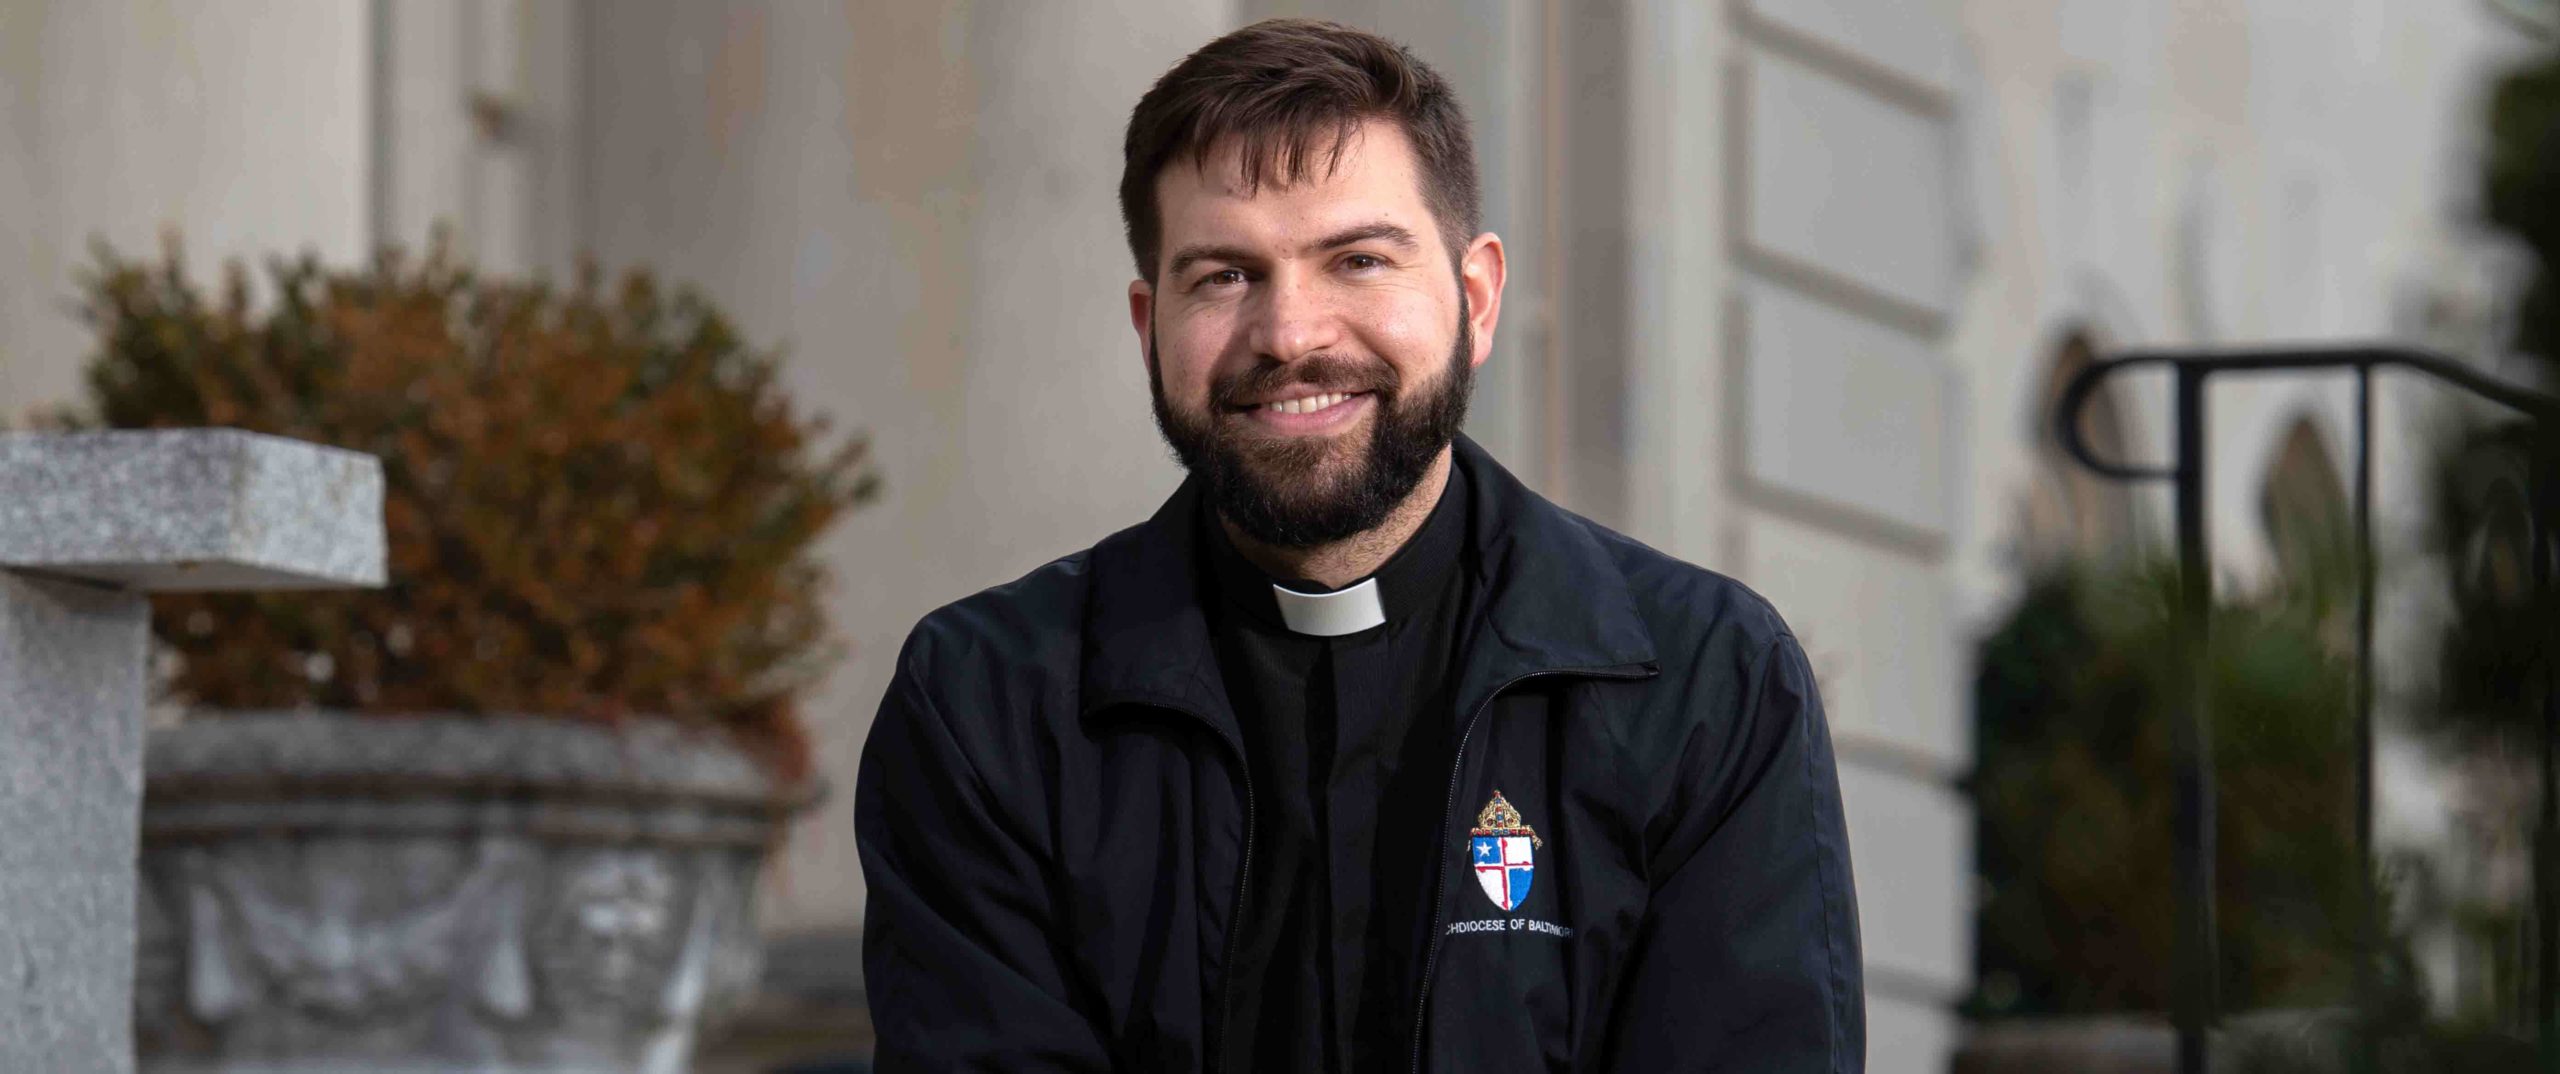 ‘Home felt like church’ for future Baltimore priest